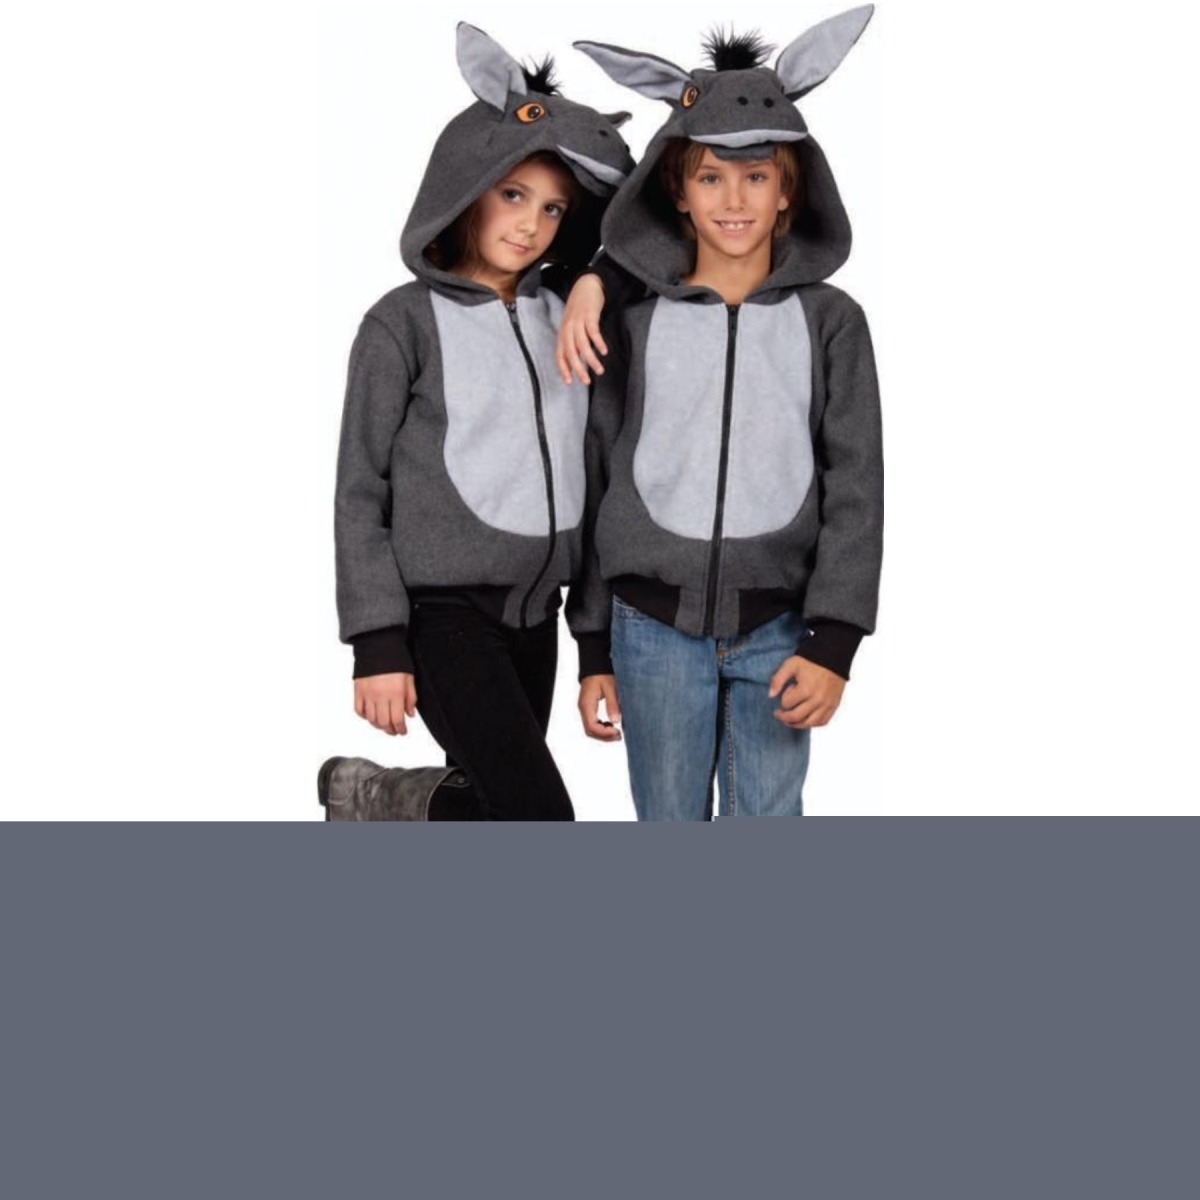 40528-m 100 Acres Donkey Hoodie Child Costume - Grey, Medium